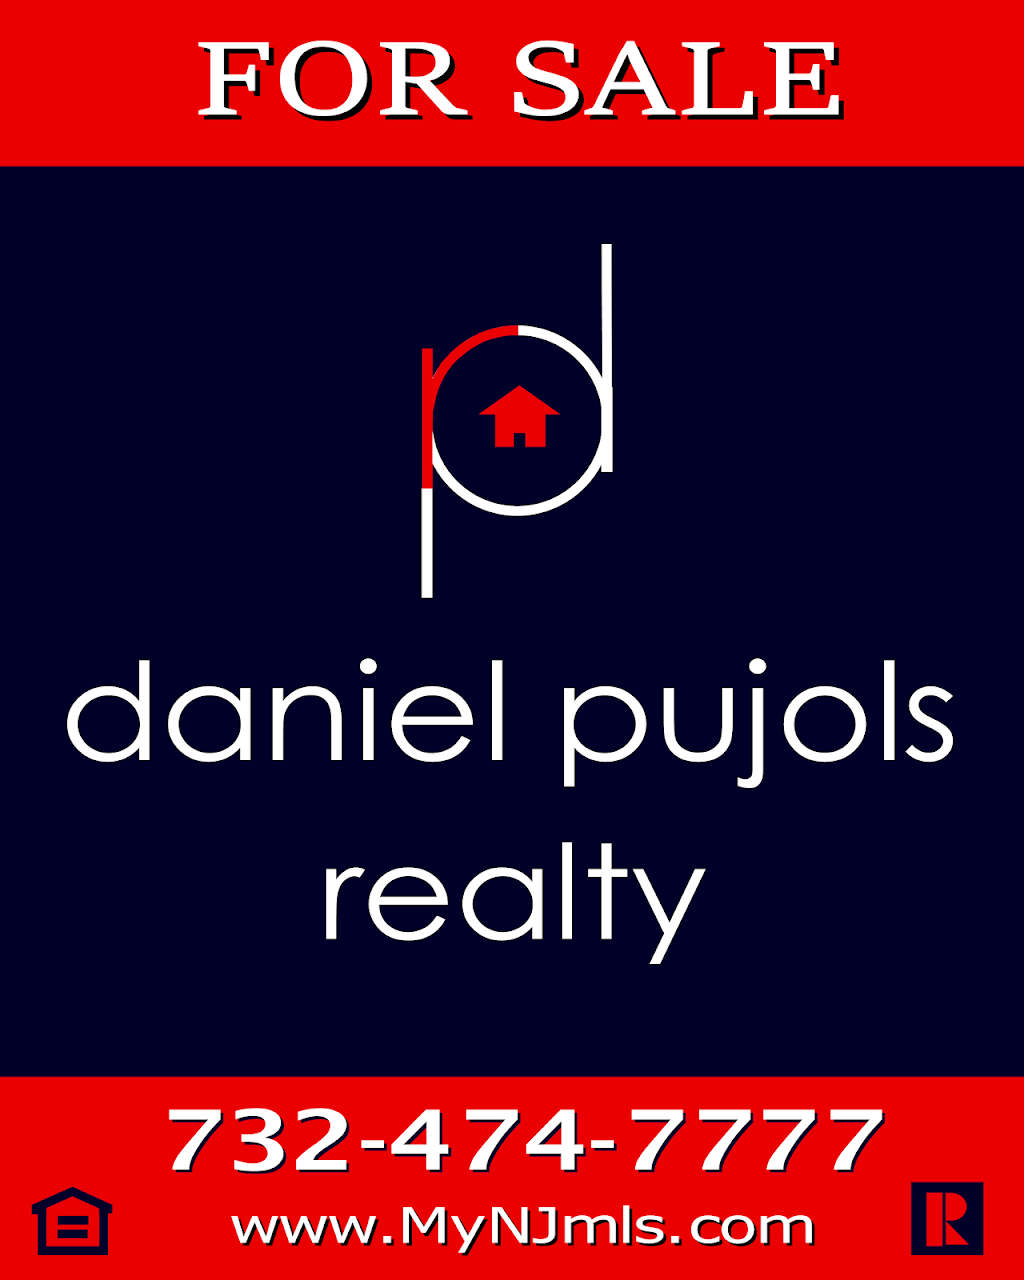 Daniel Pujols Realty | 655 Amboy Ave Suite A-106, Woodbridge Township, NJ 07095 | Phone: (732) 474-7777